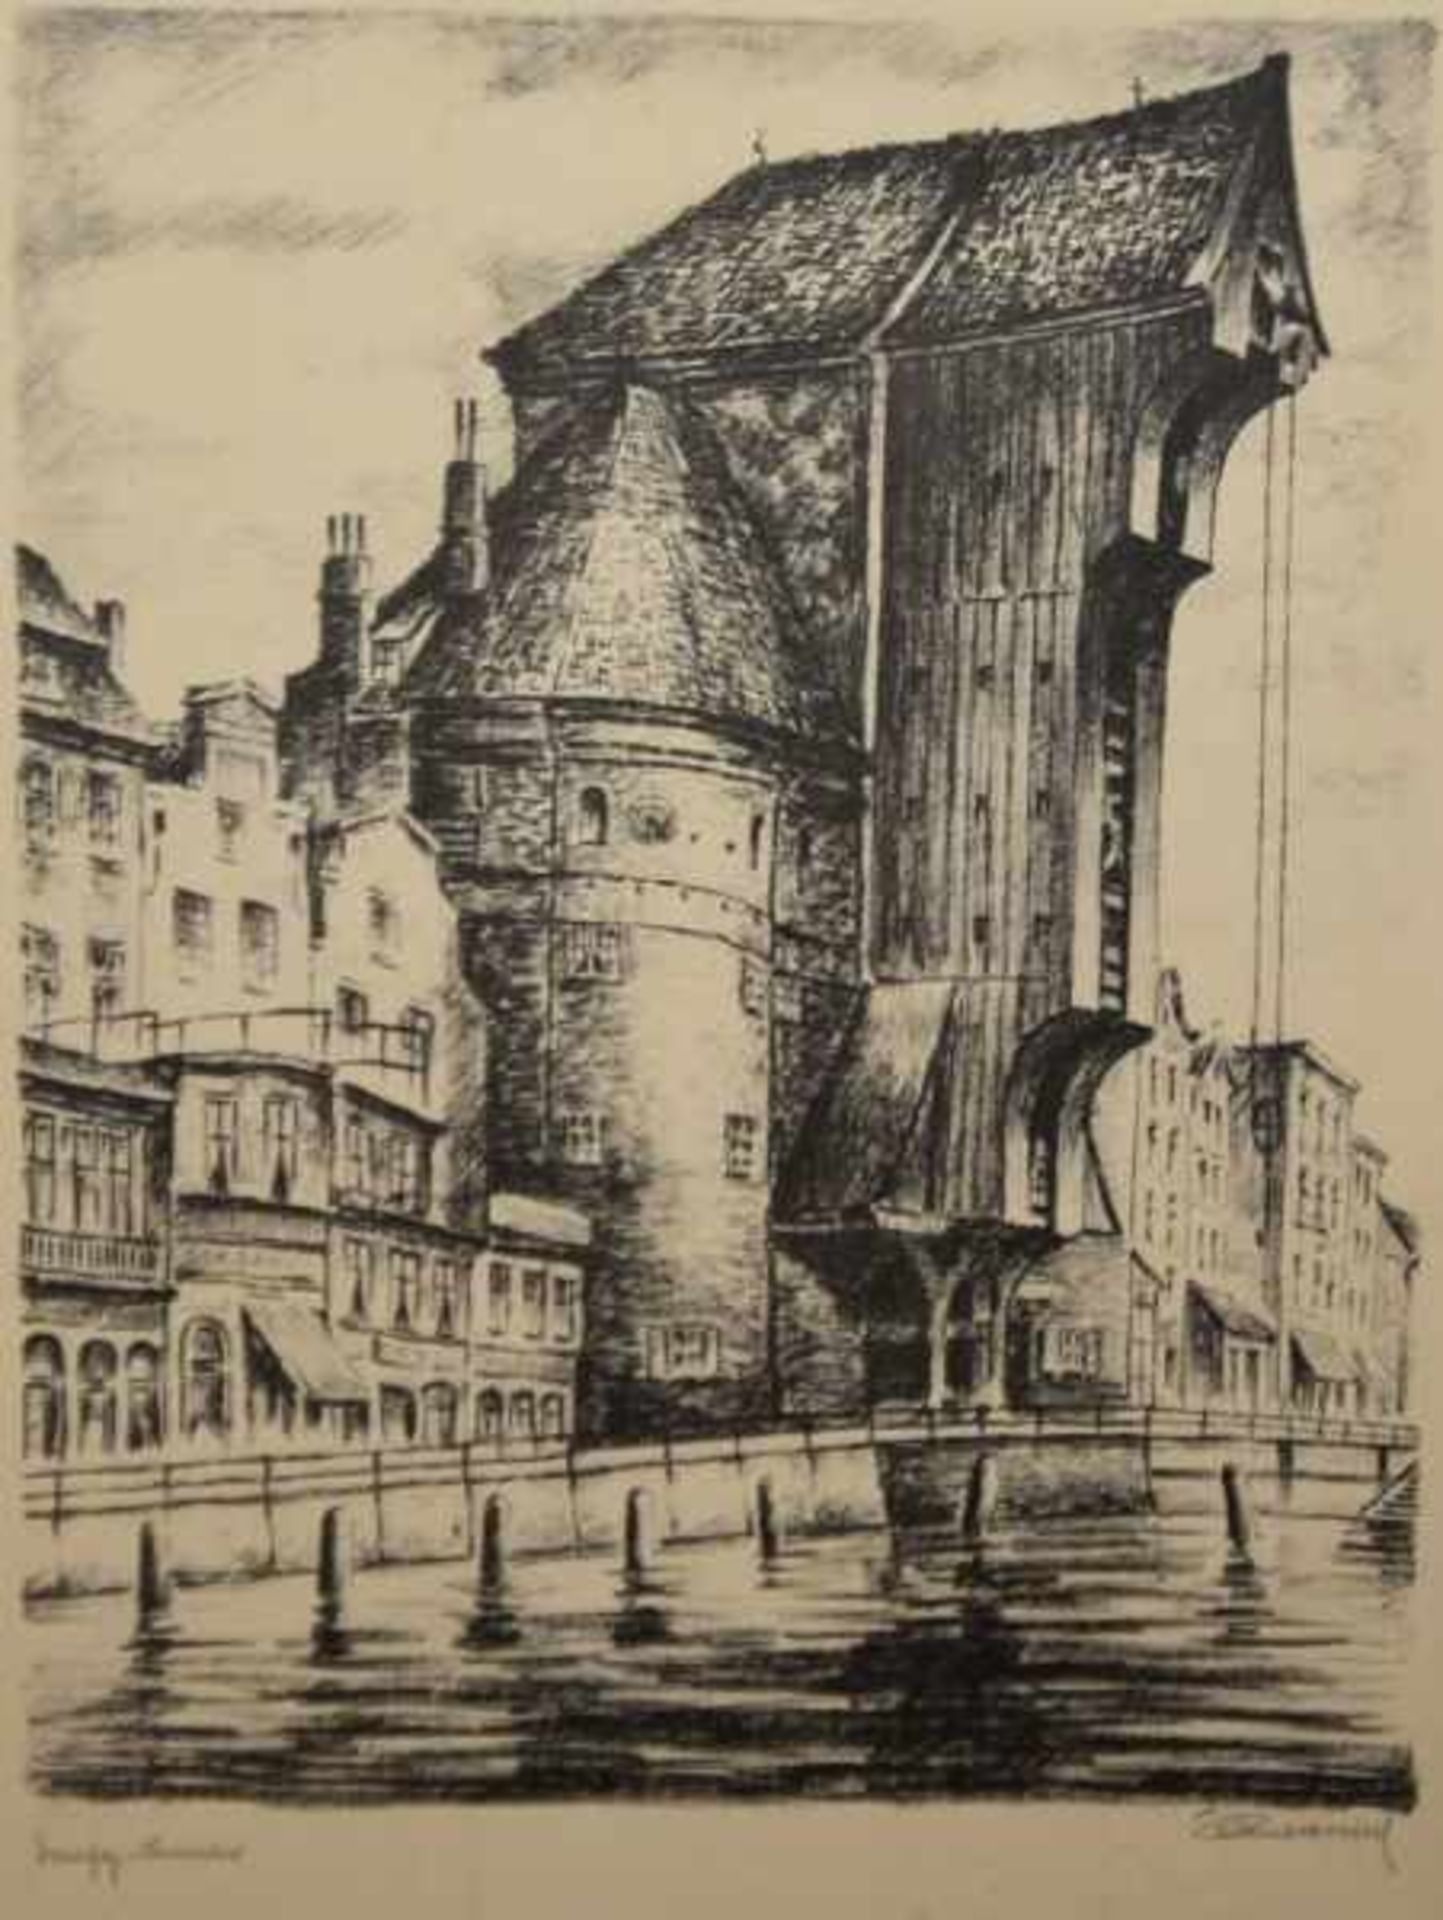 UNBEKANNT (Anfang 20.Jahrhundert) "Danzig-Krantor", Ansicht am Fluß, Lithographie in Schwarz,